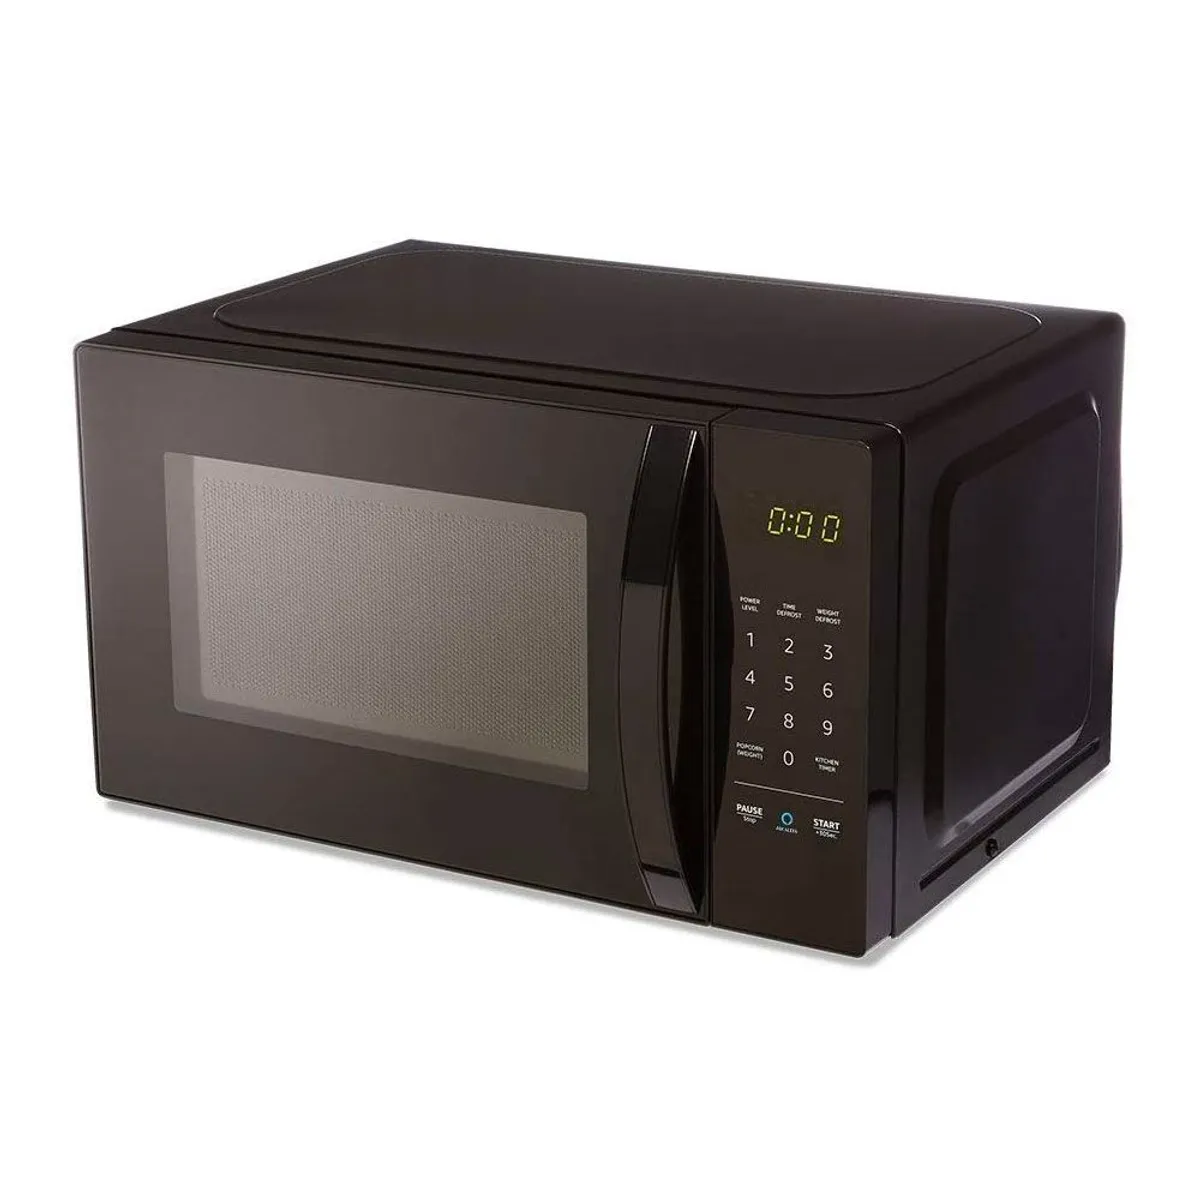 AmazonBasics Microwave